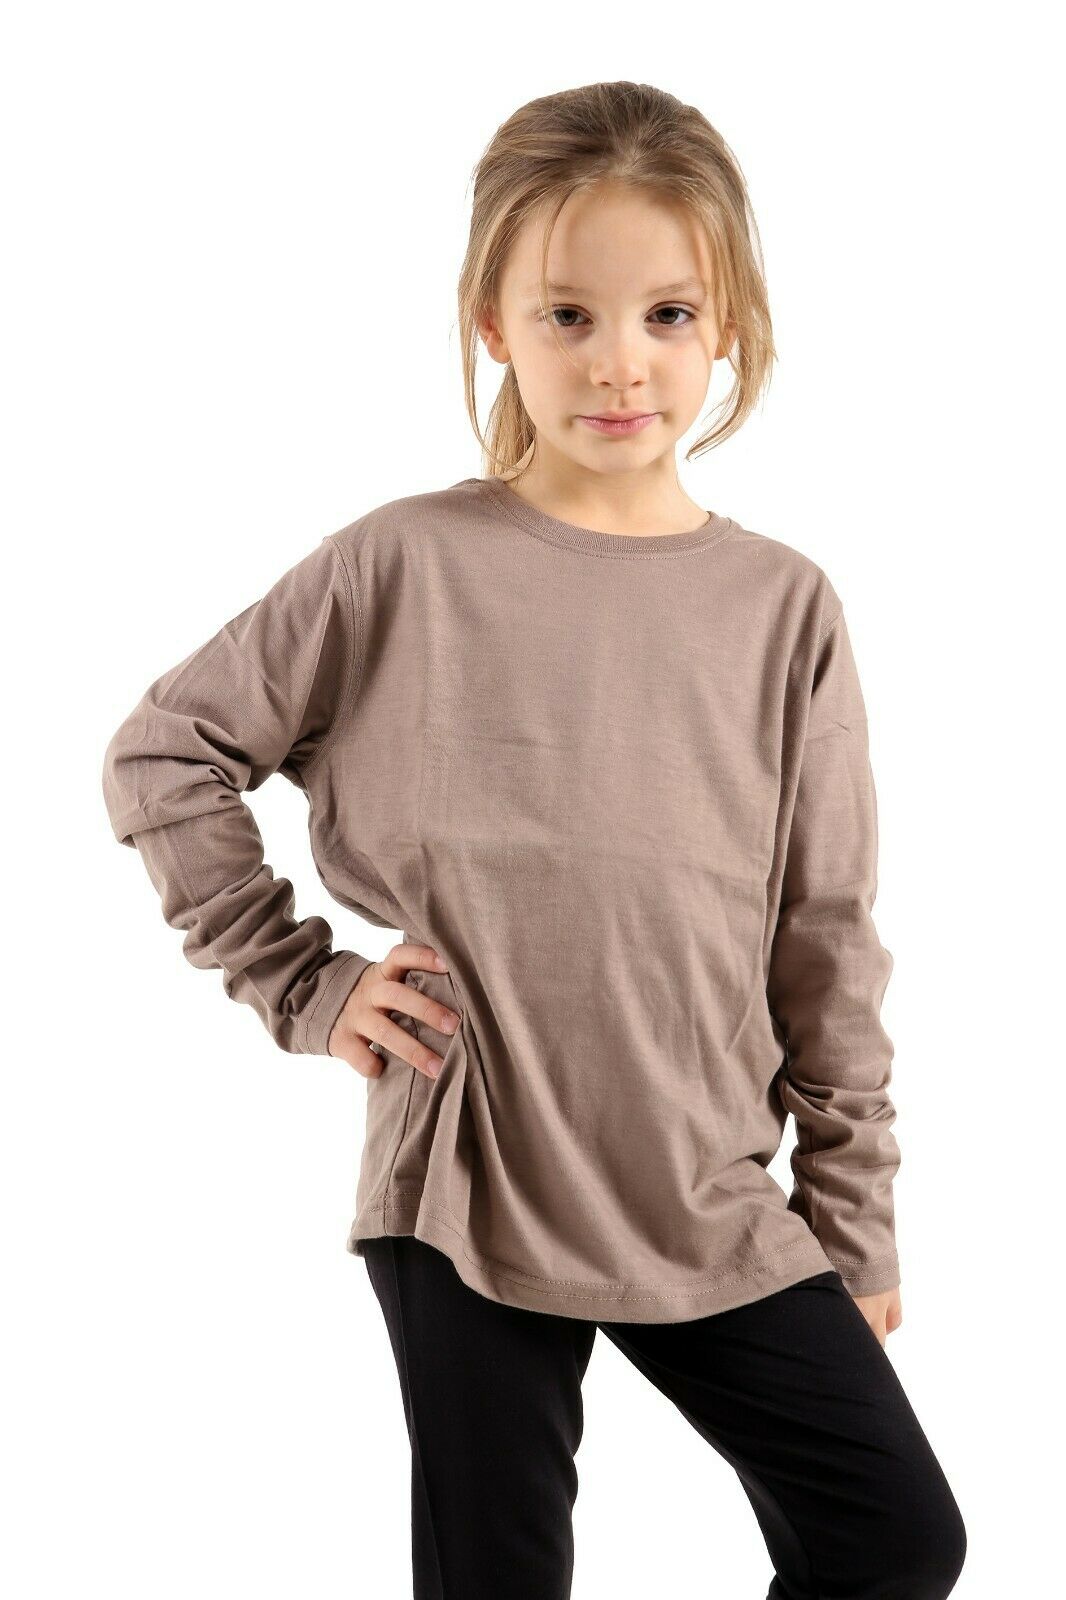 Girls Plain Long Sleeve Top Kids Children Crew Neck Tops Tee T-Shirt 2-13 Years 